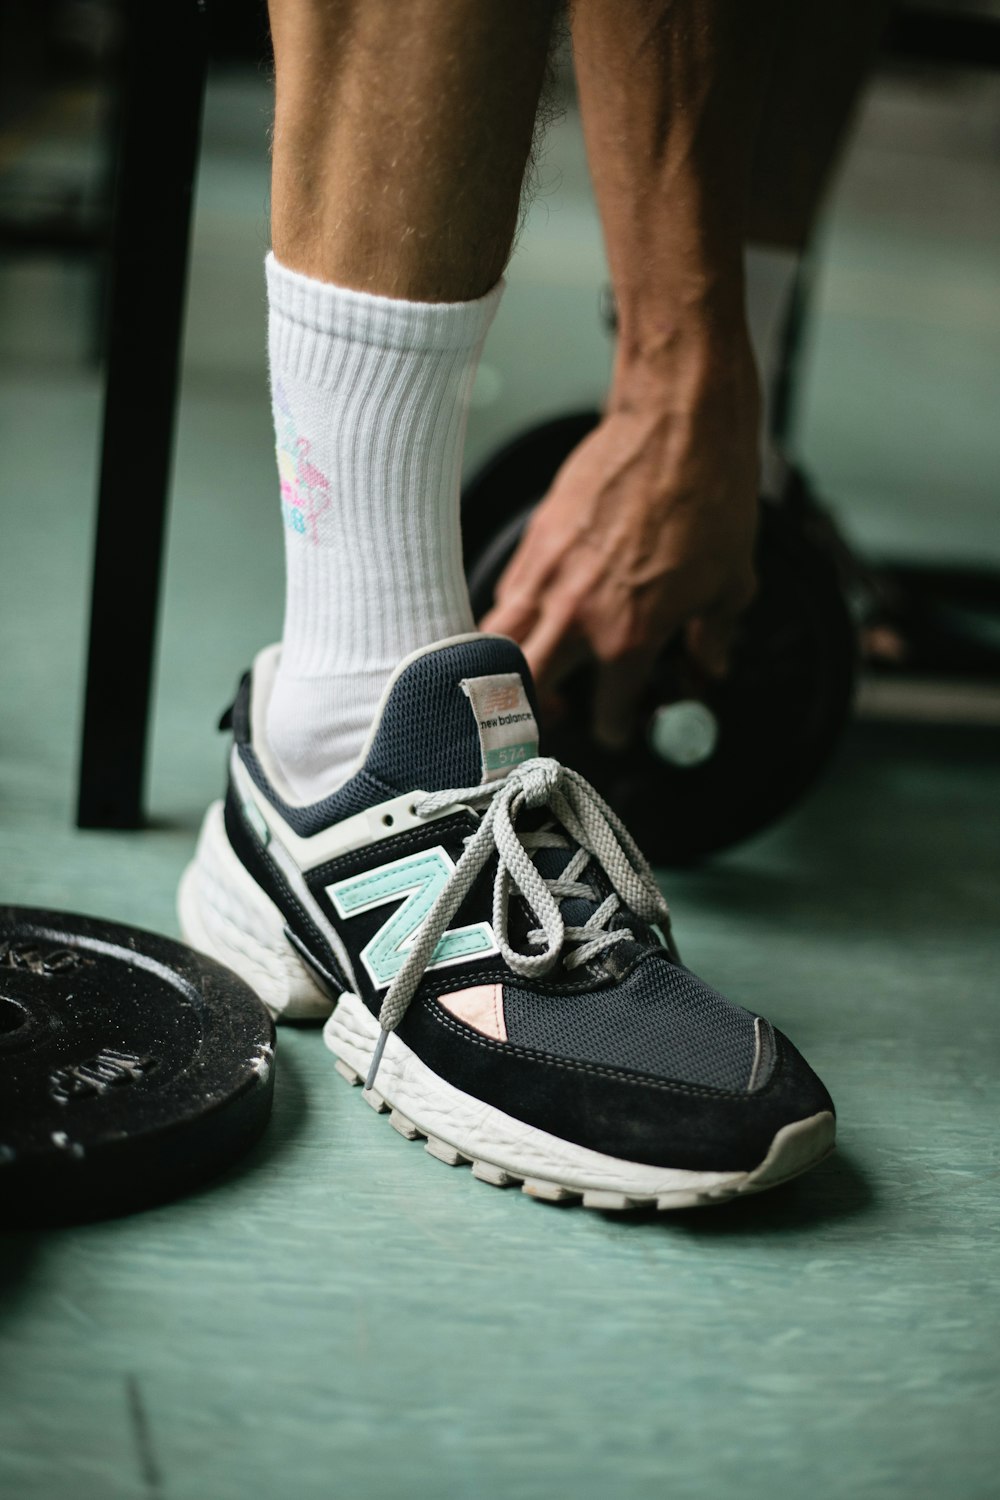 person wearing black and white new balance athletic shoes photo – Free  Landen Image on Unsplash